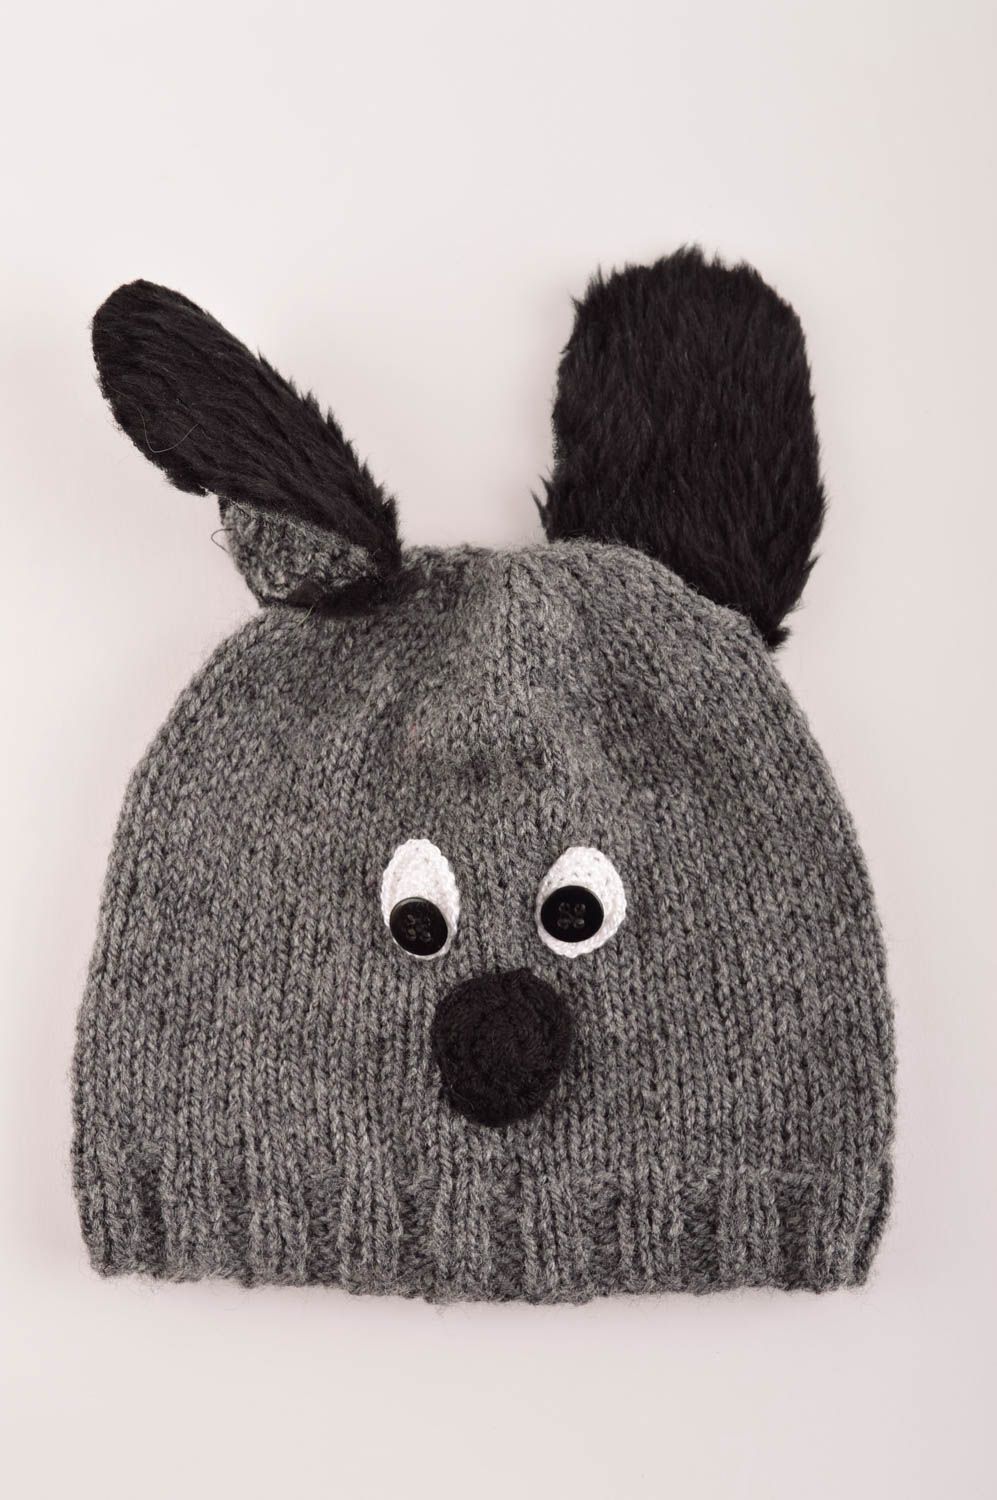 Handmade crocheted hat for children crocheted animal hat warm baby hat photo 5